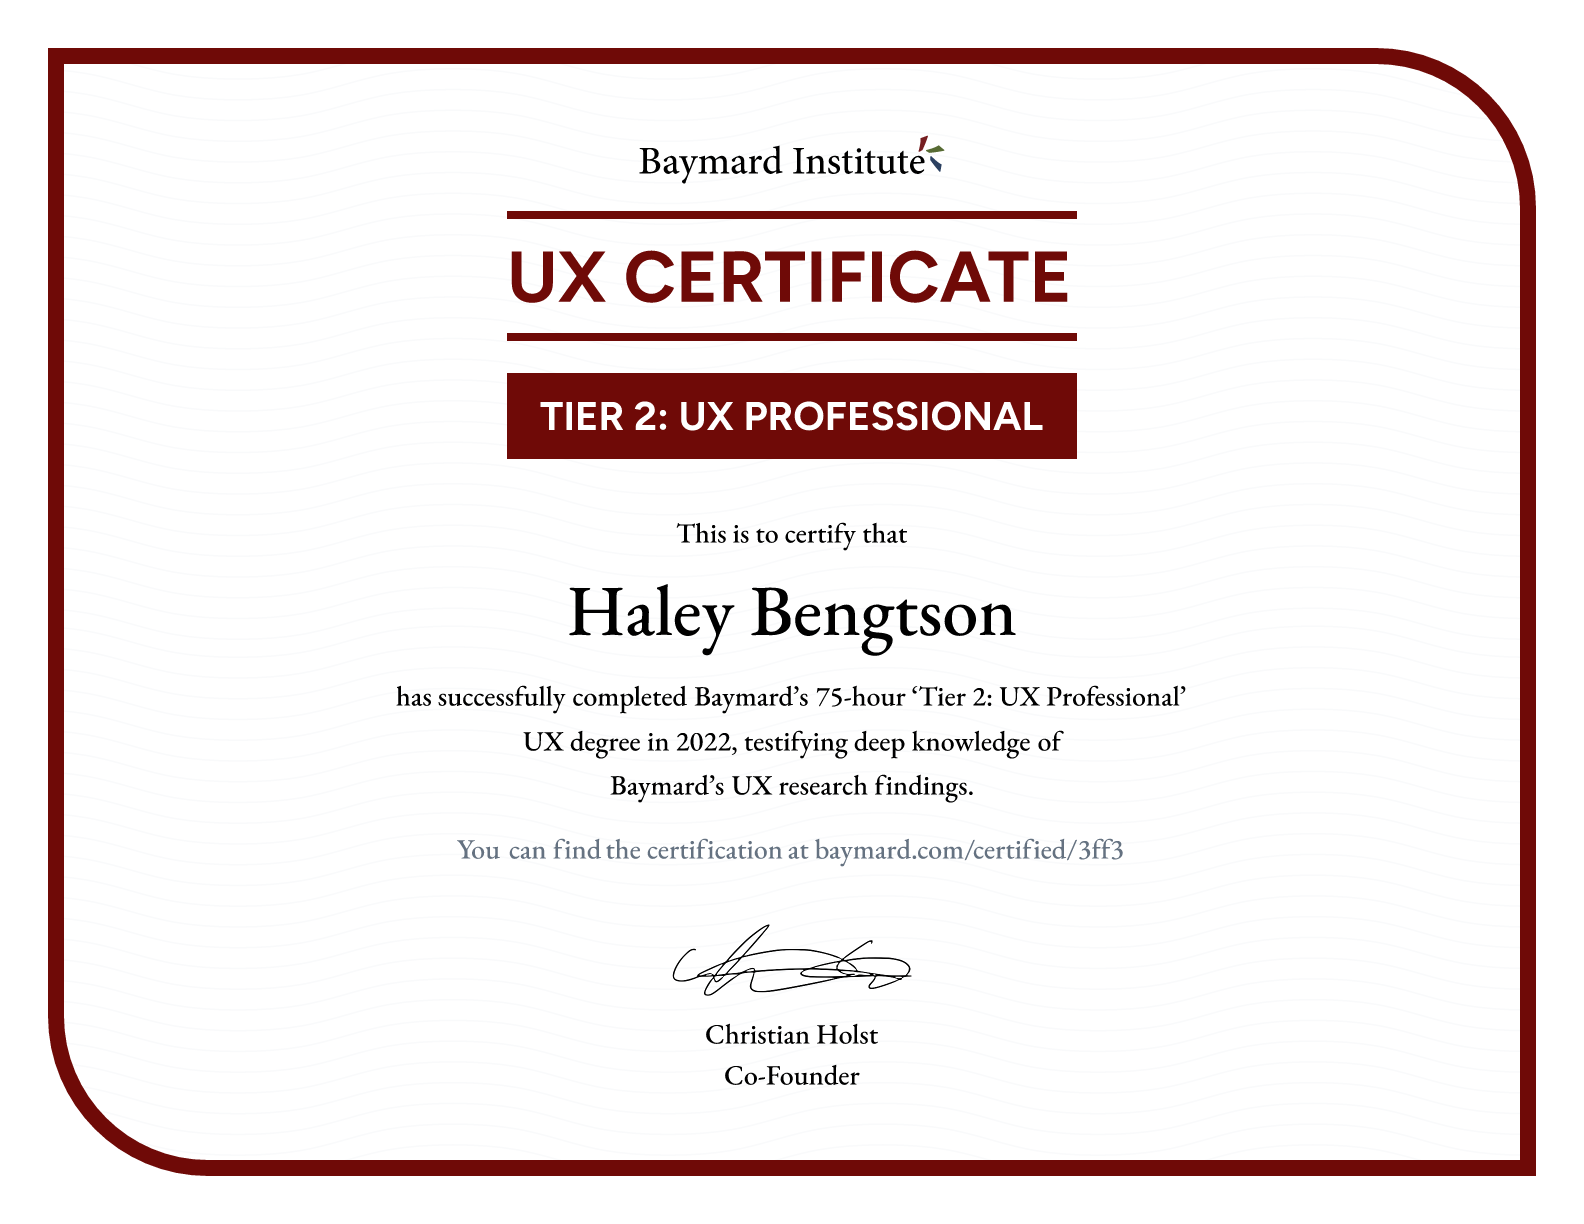 Haley Bengtson’s certificate